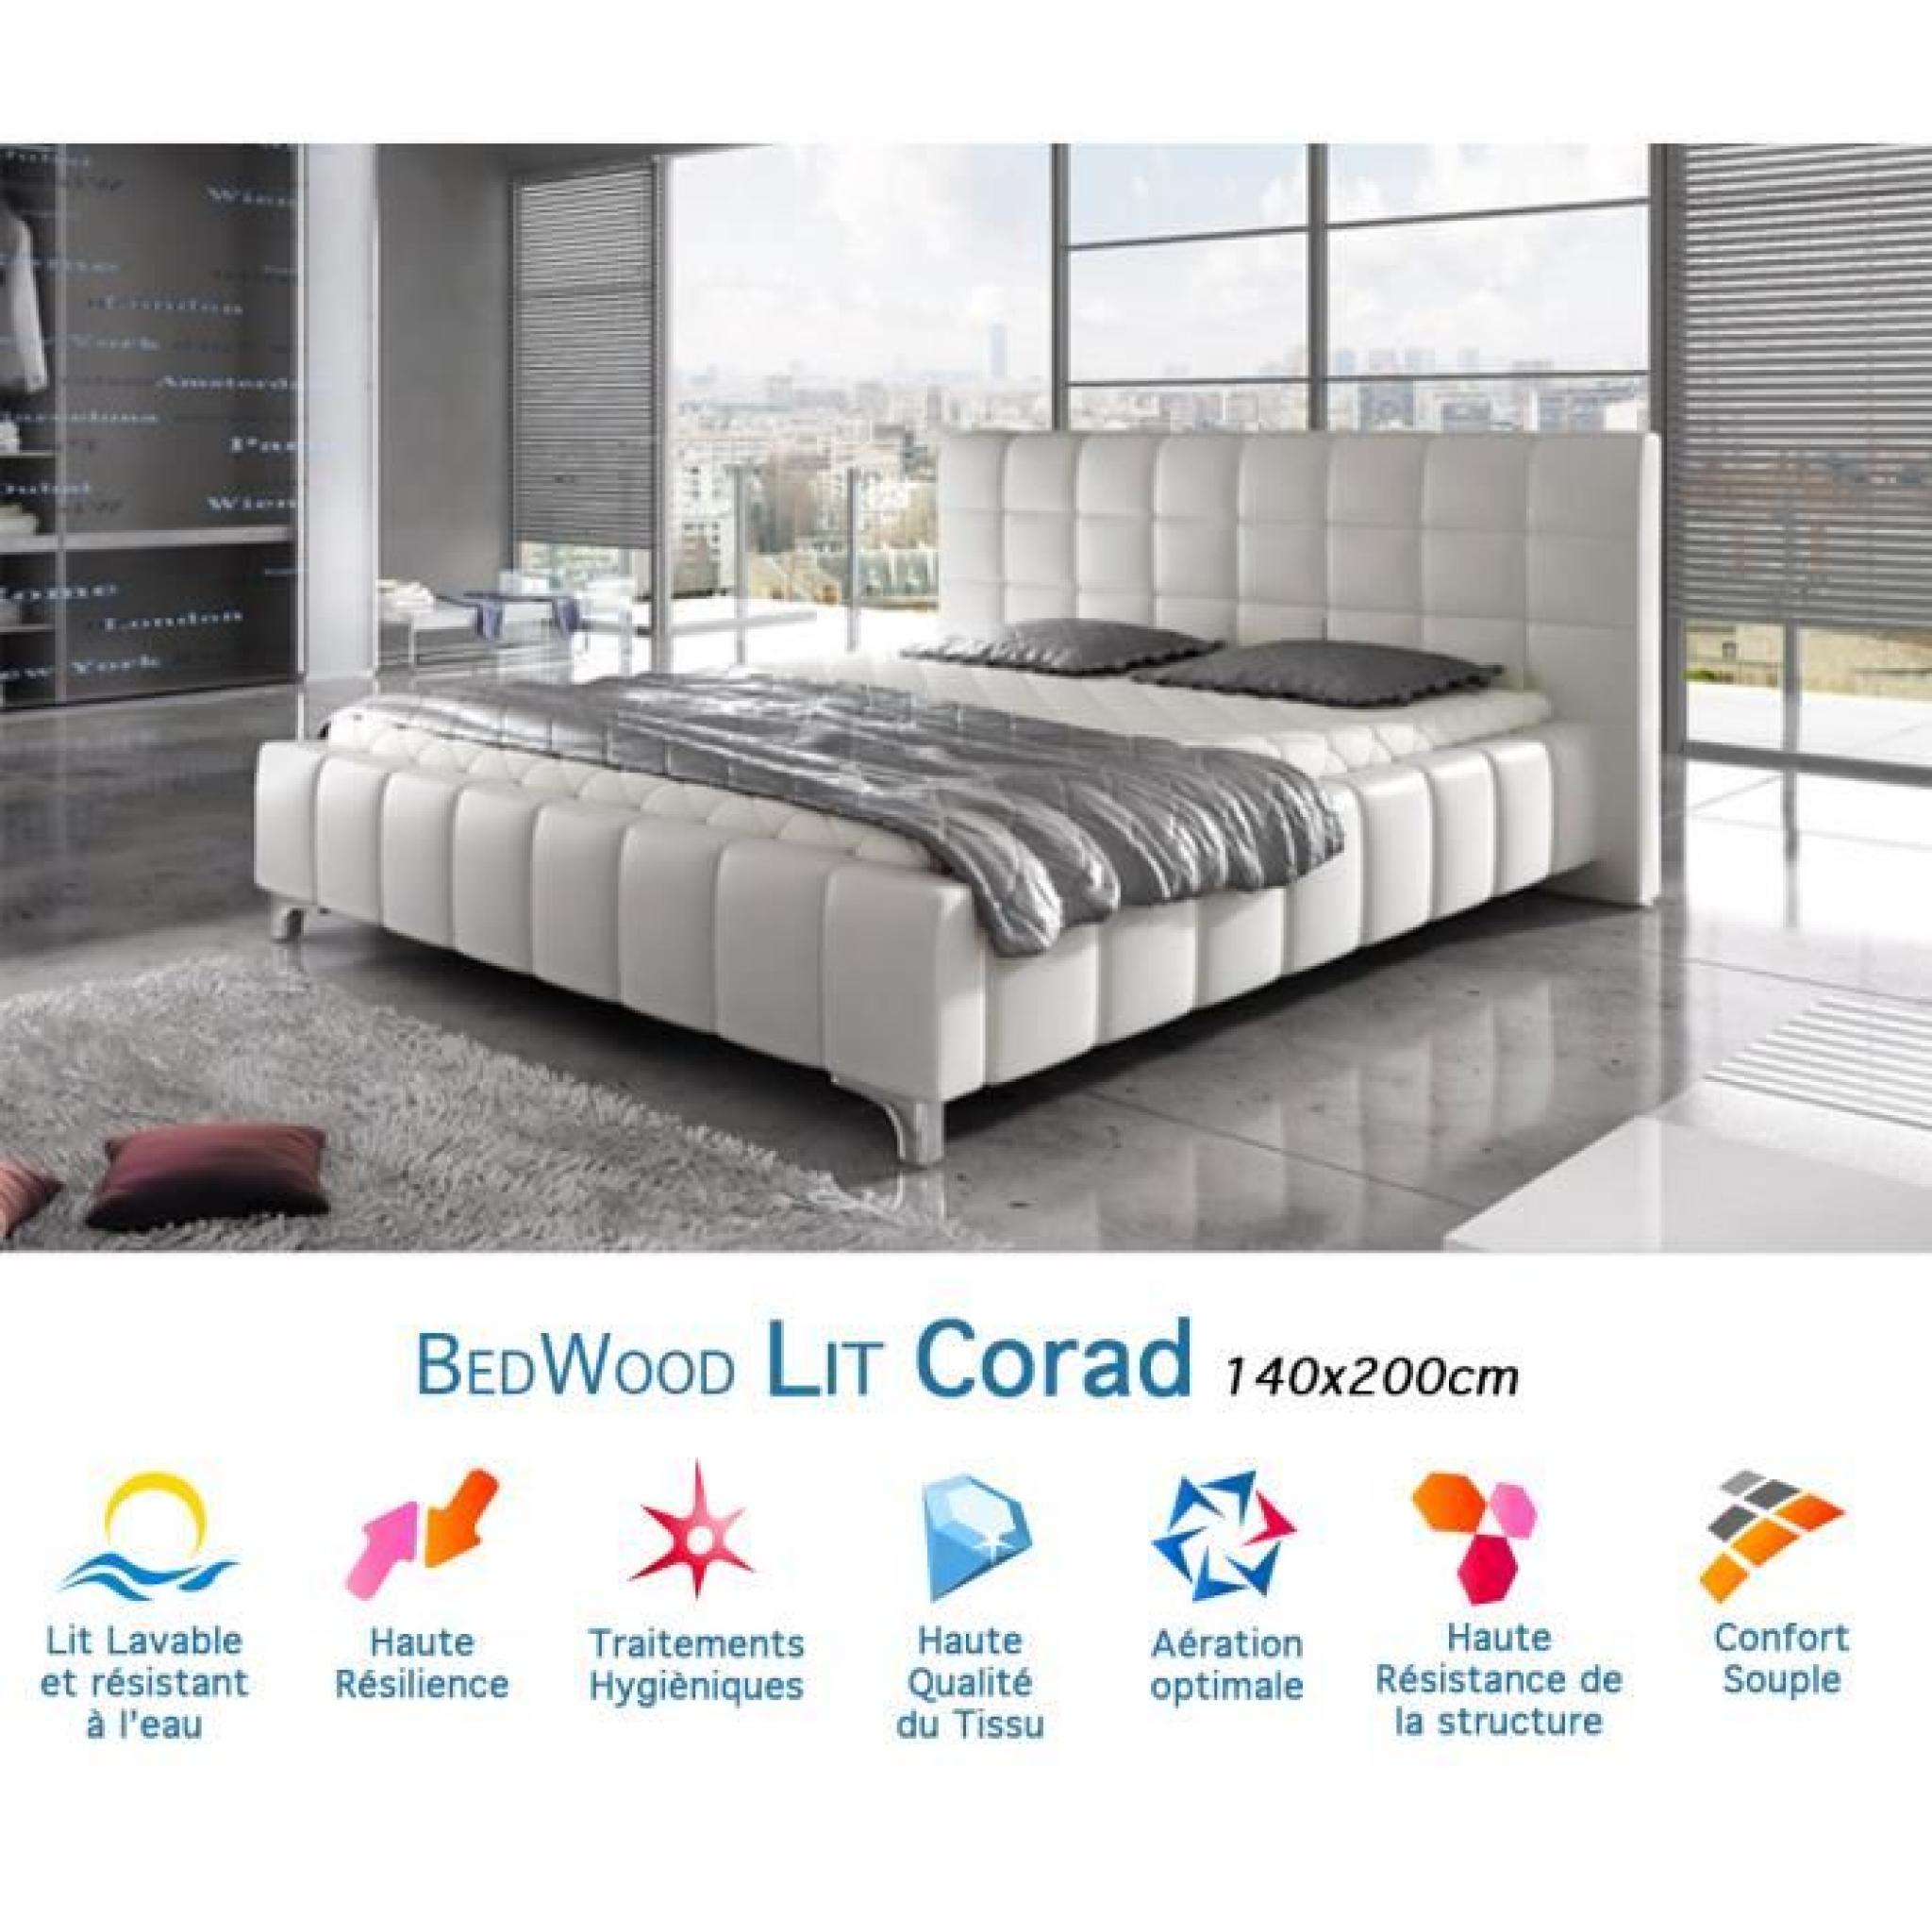 Lit Design Bedwood Corad 140x200cm